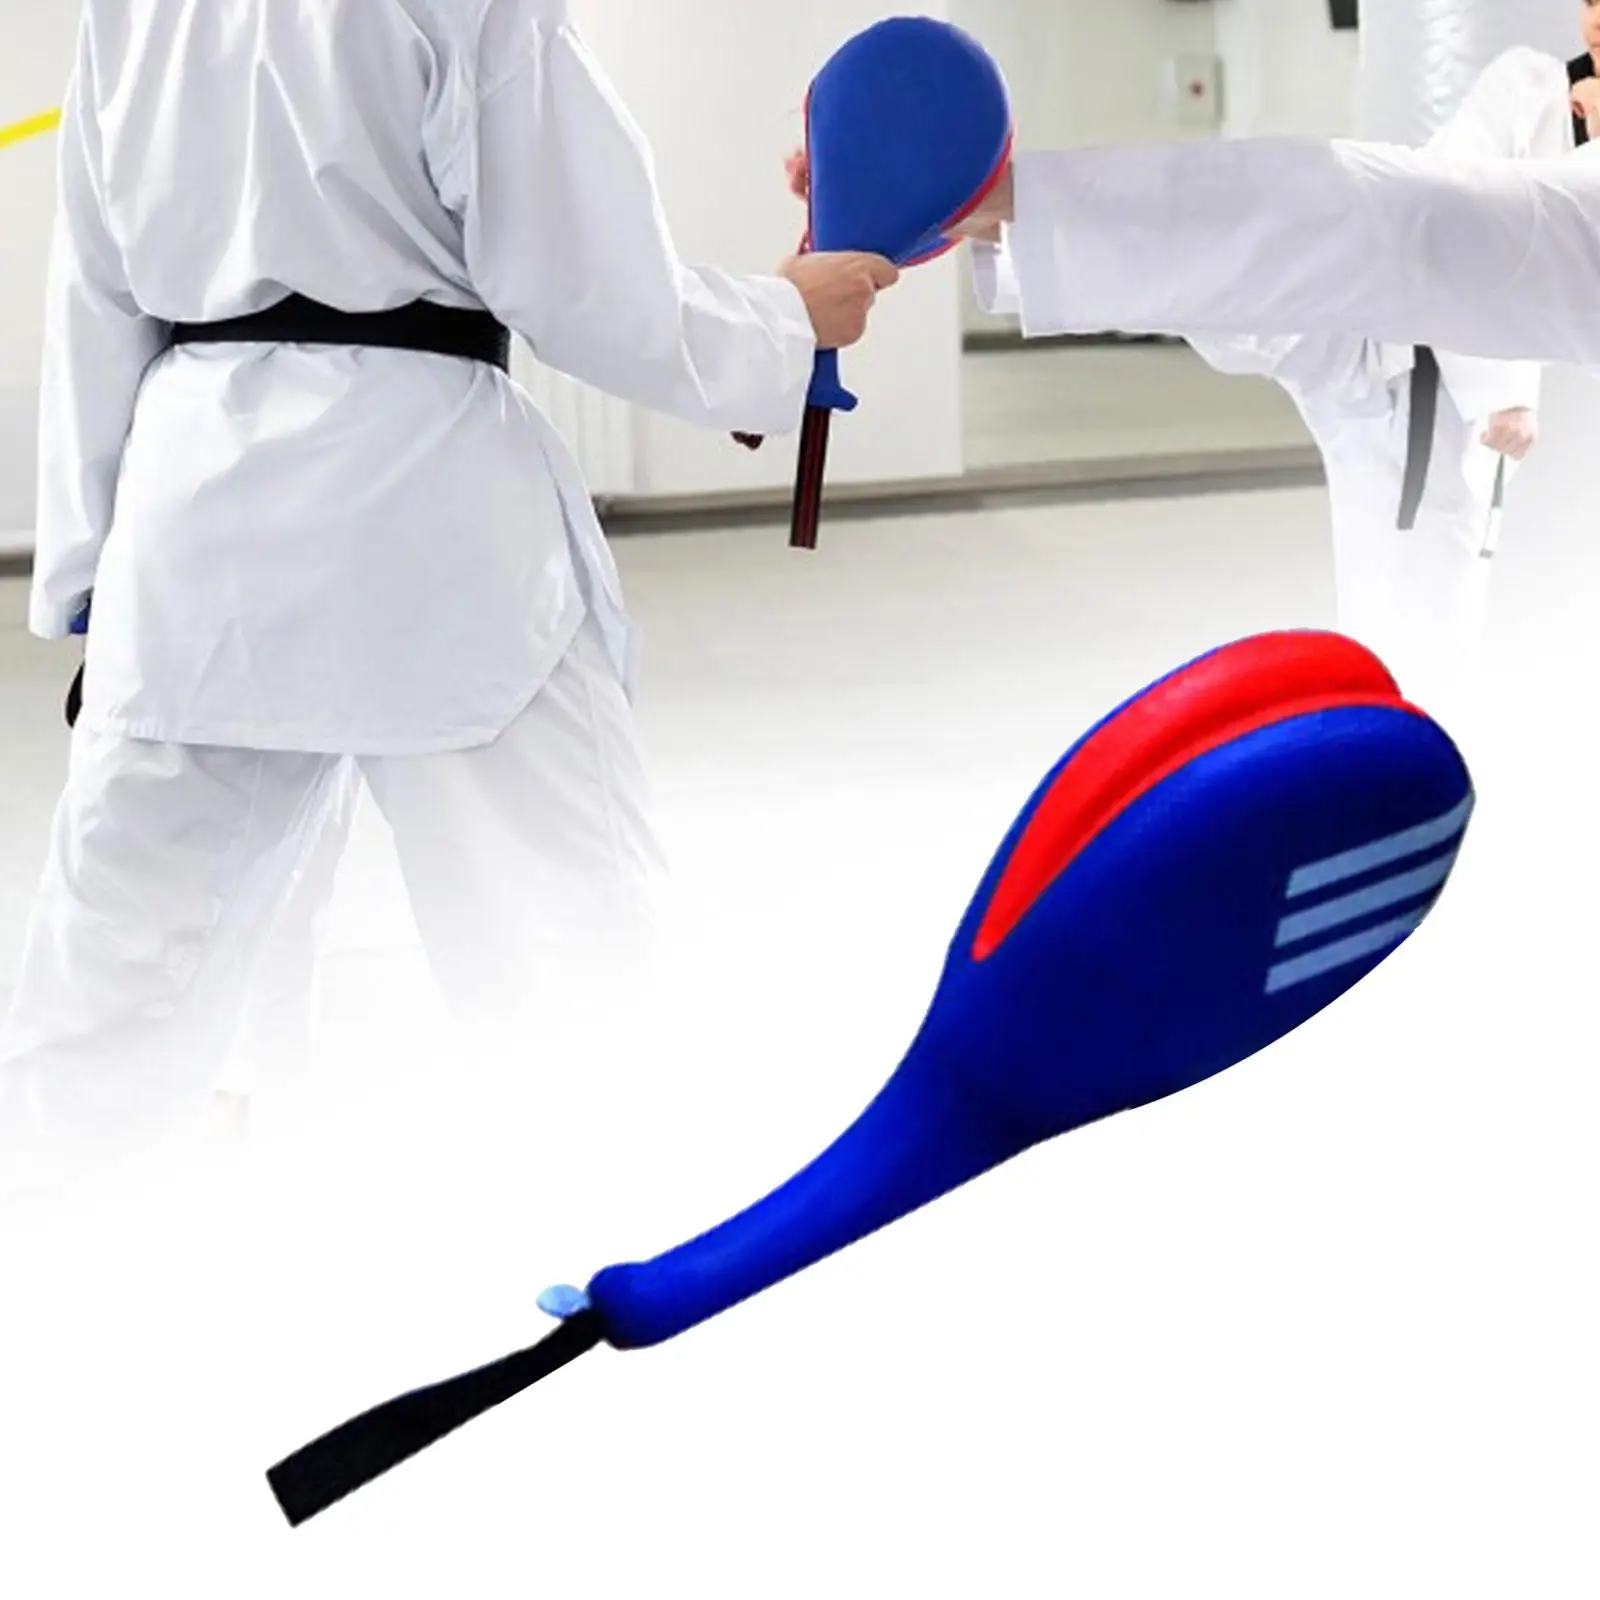 Taekwondo Kick Pad Kick Target Lightweight Durable Portable Target